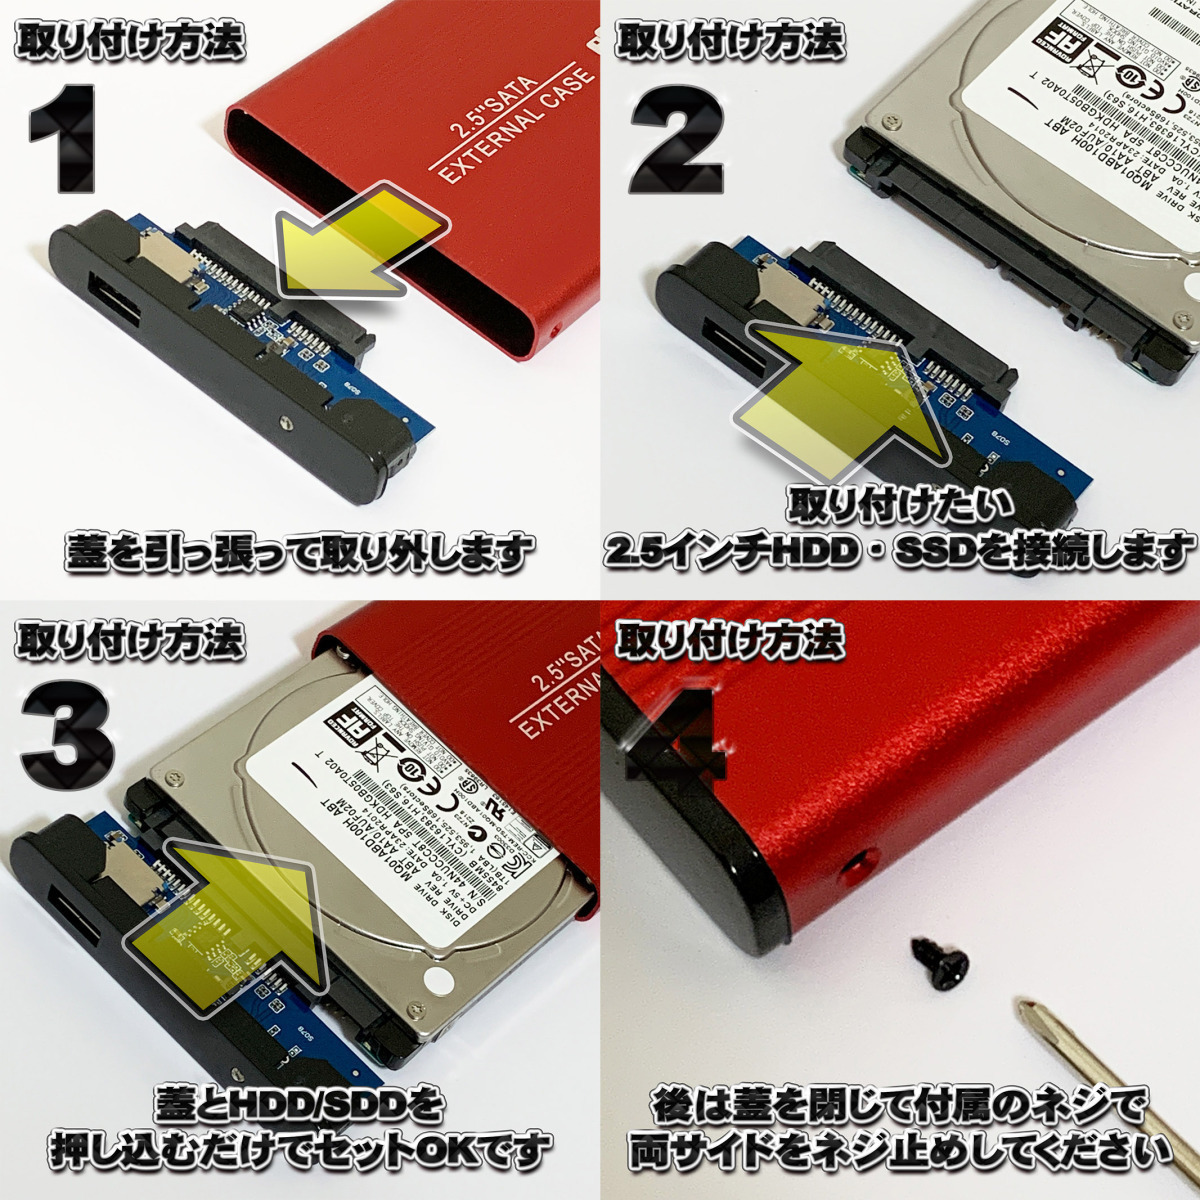 【USB3.0対応】【アルミケース】 2.5インチ HDD SSD ハードディスク 外付け SATA 3.0 USB 接続 【シルバー】_画像2